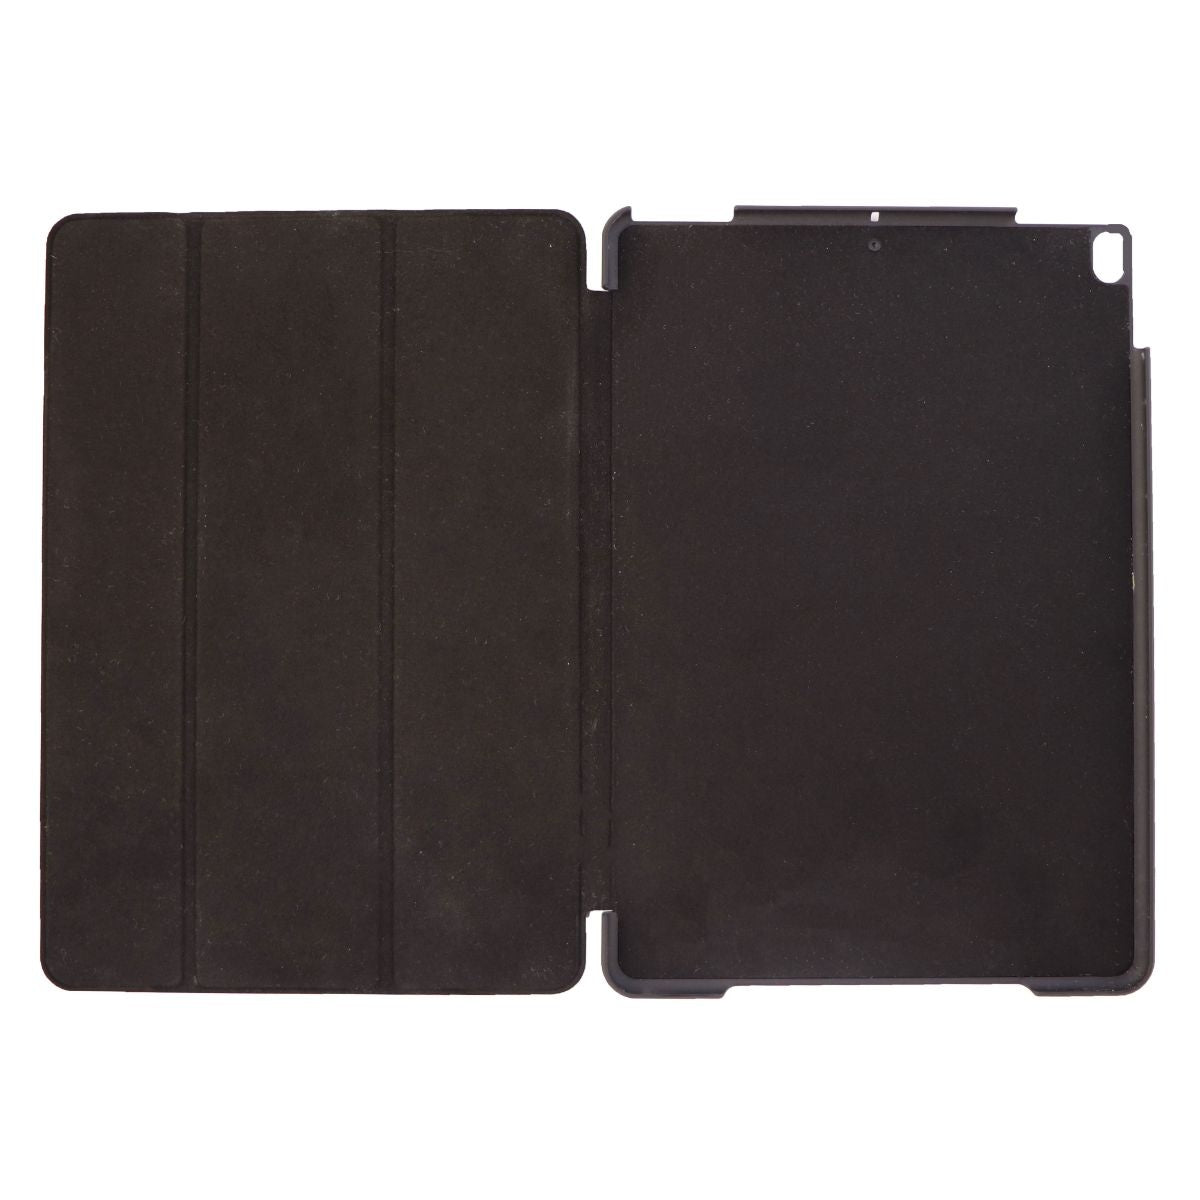 Verizon Slim Hardshell Folio Cover Case for Apple iPad Pro (10.5) 2017 - Black iPad/Tablet Accessories - Cases, Covers, Keyboard Folios Verizon    - Simple Cell Bulk Wholesale Pricing - USA Seller